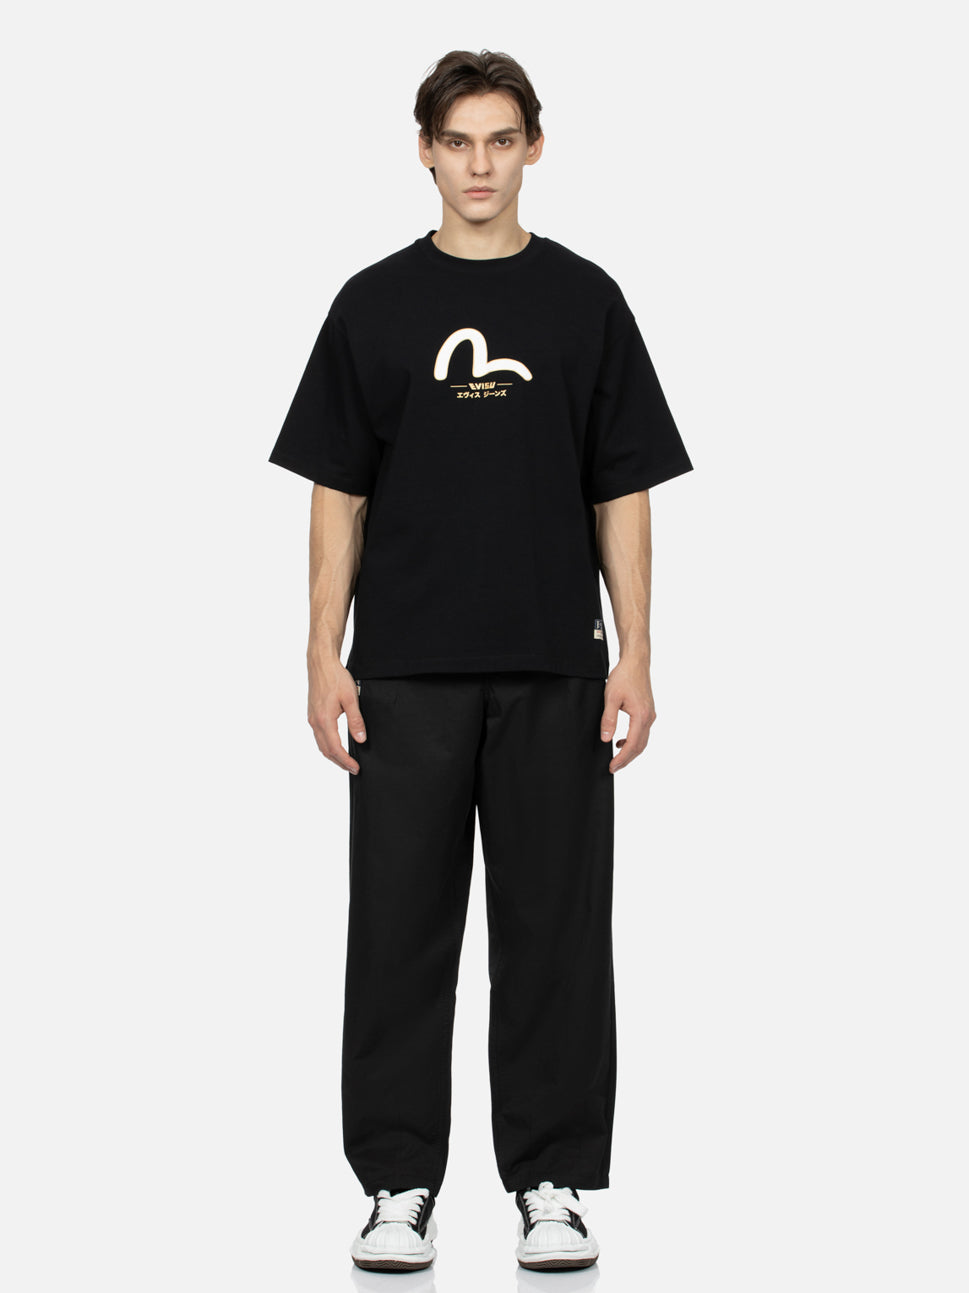 Evisu Seagull Daicock With Kamon Gold Print T-Shirt